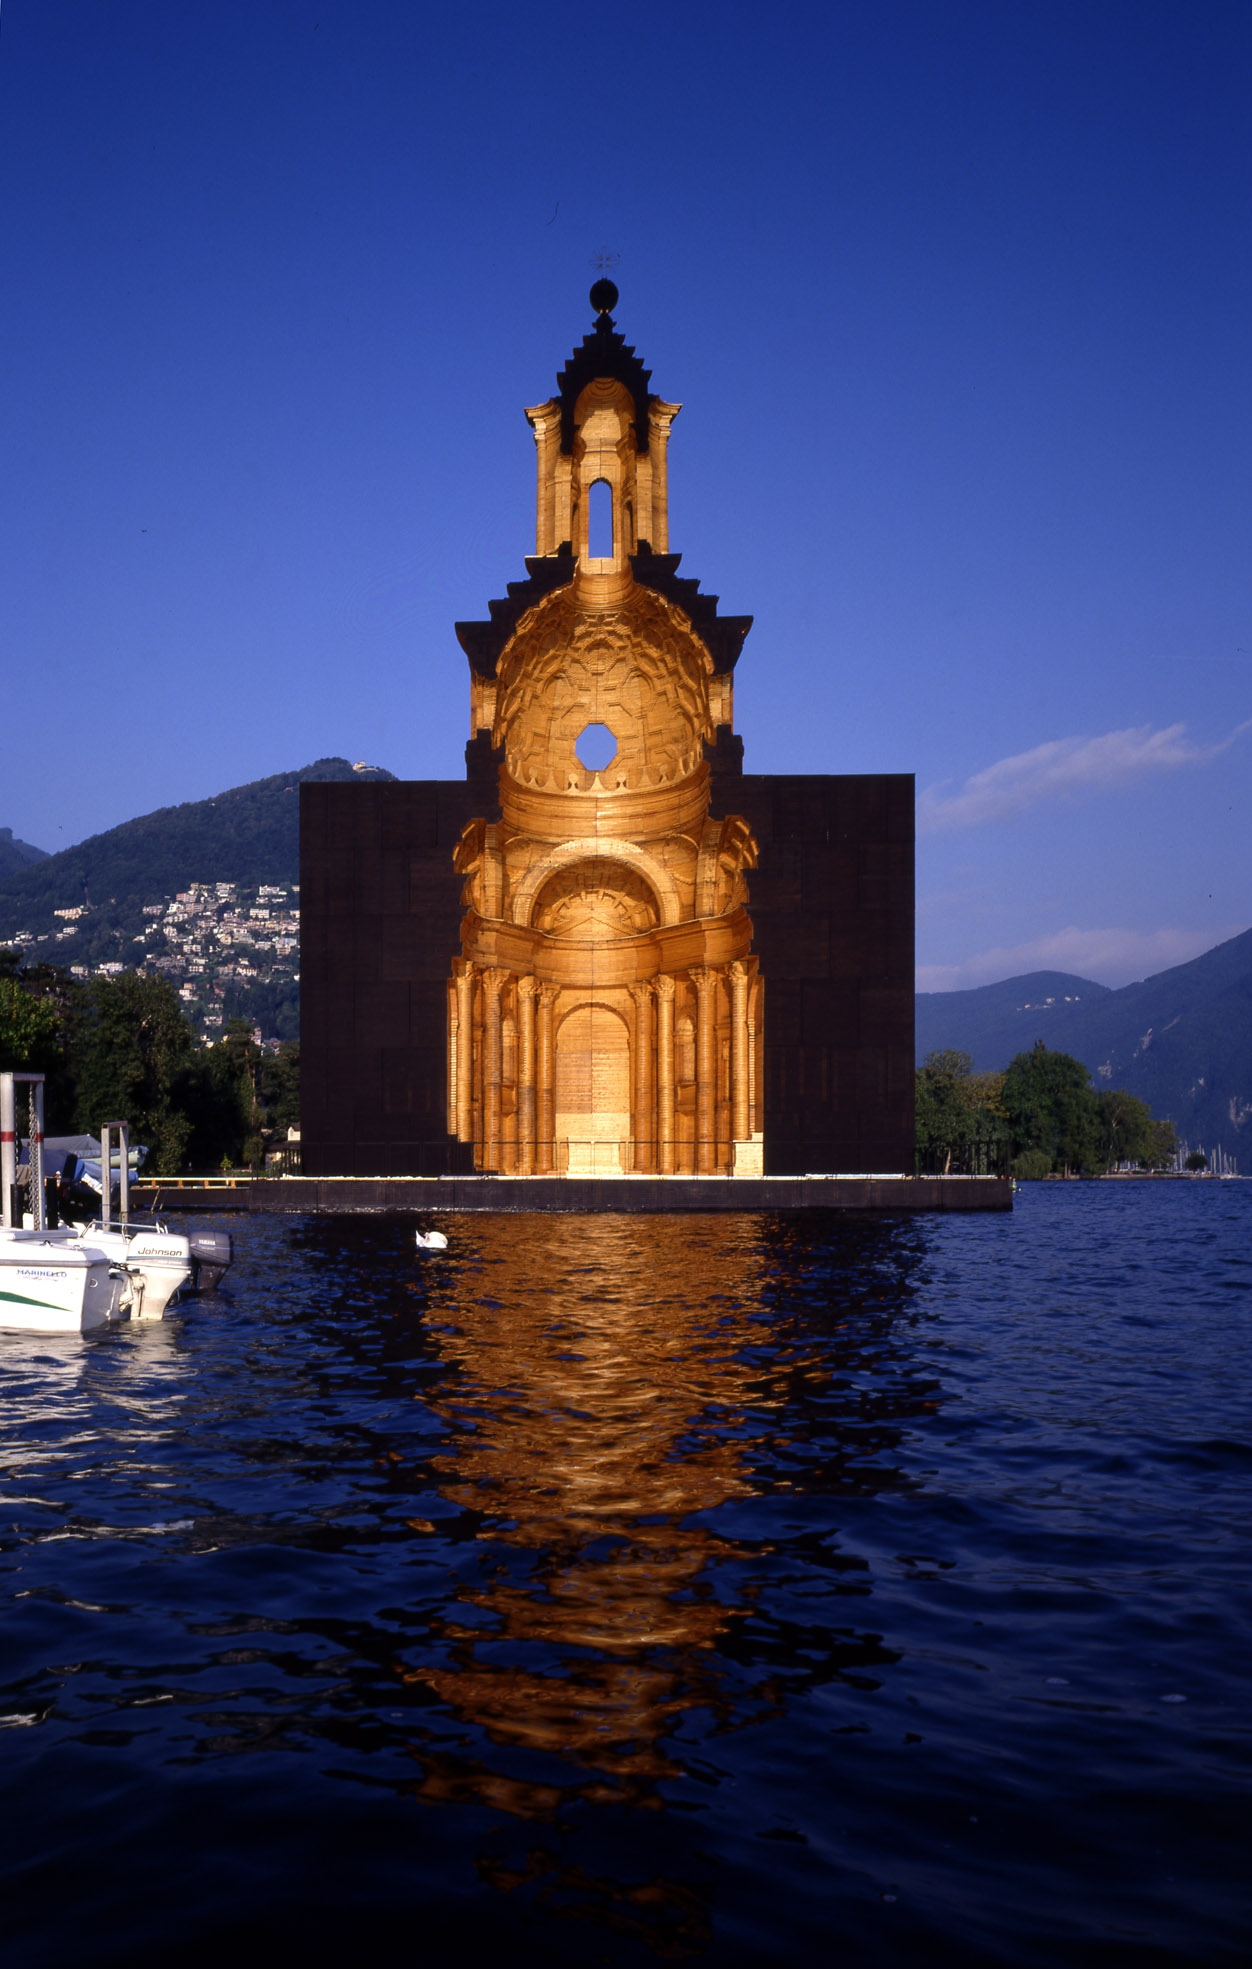 Réplique en bois de l’église de Francesco Borromini San Carlo alle Quattro Fontane sur le lac de Lugano, 1999-2003, photo: Pino Musi